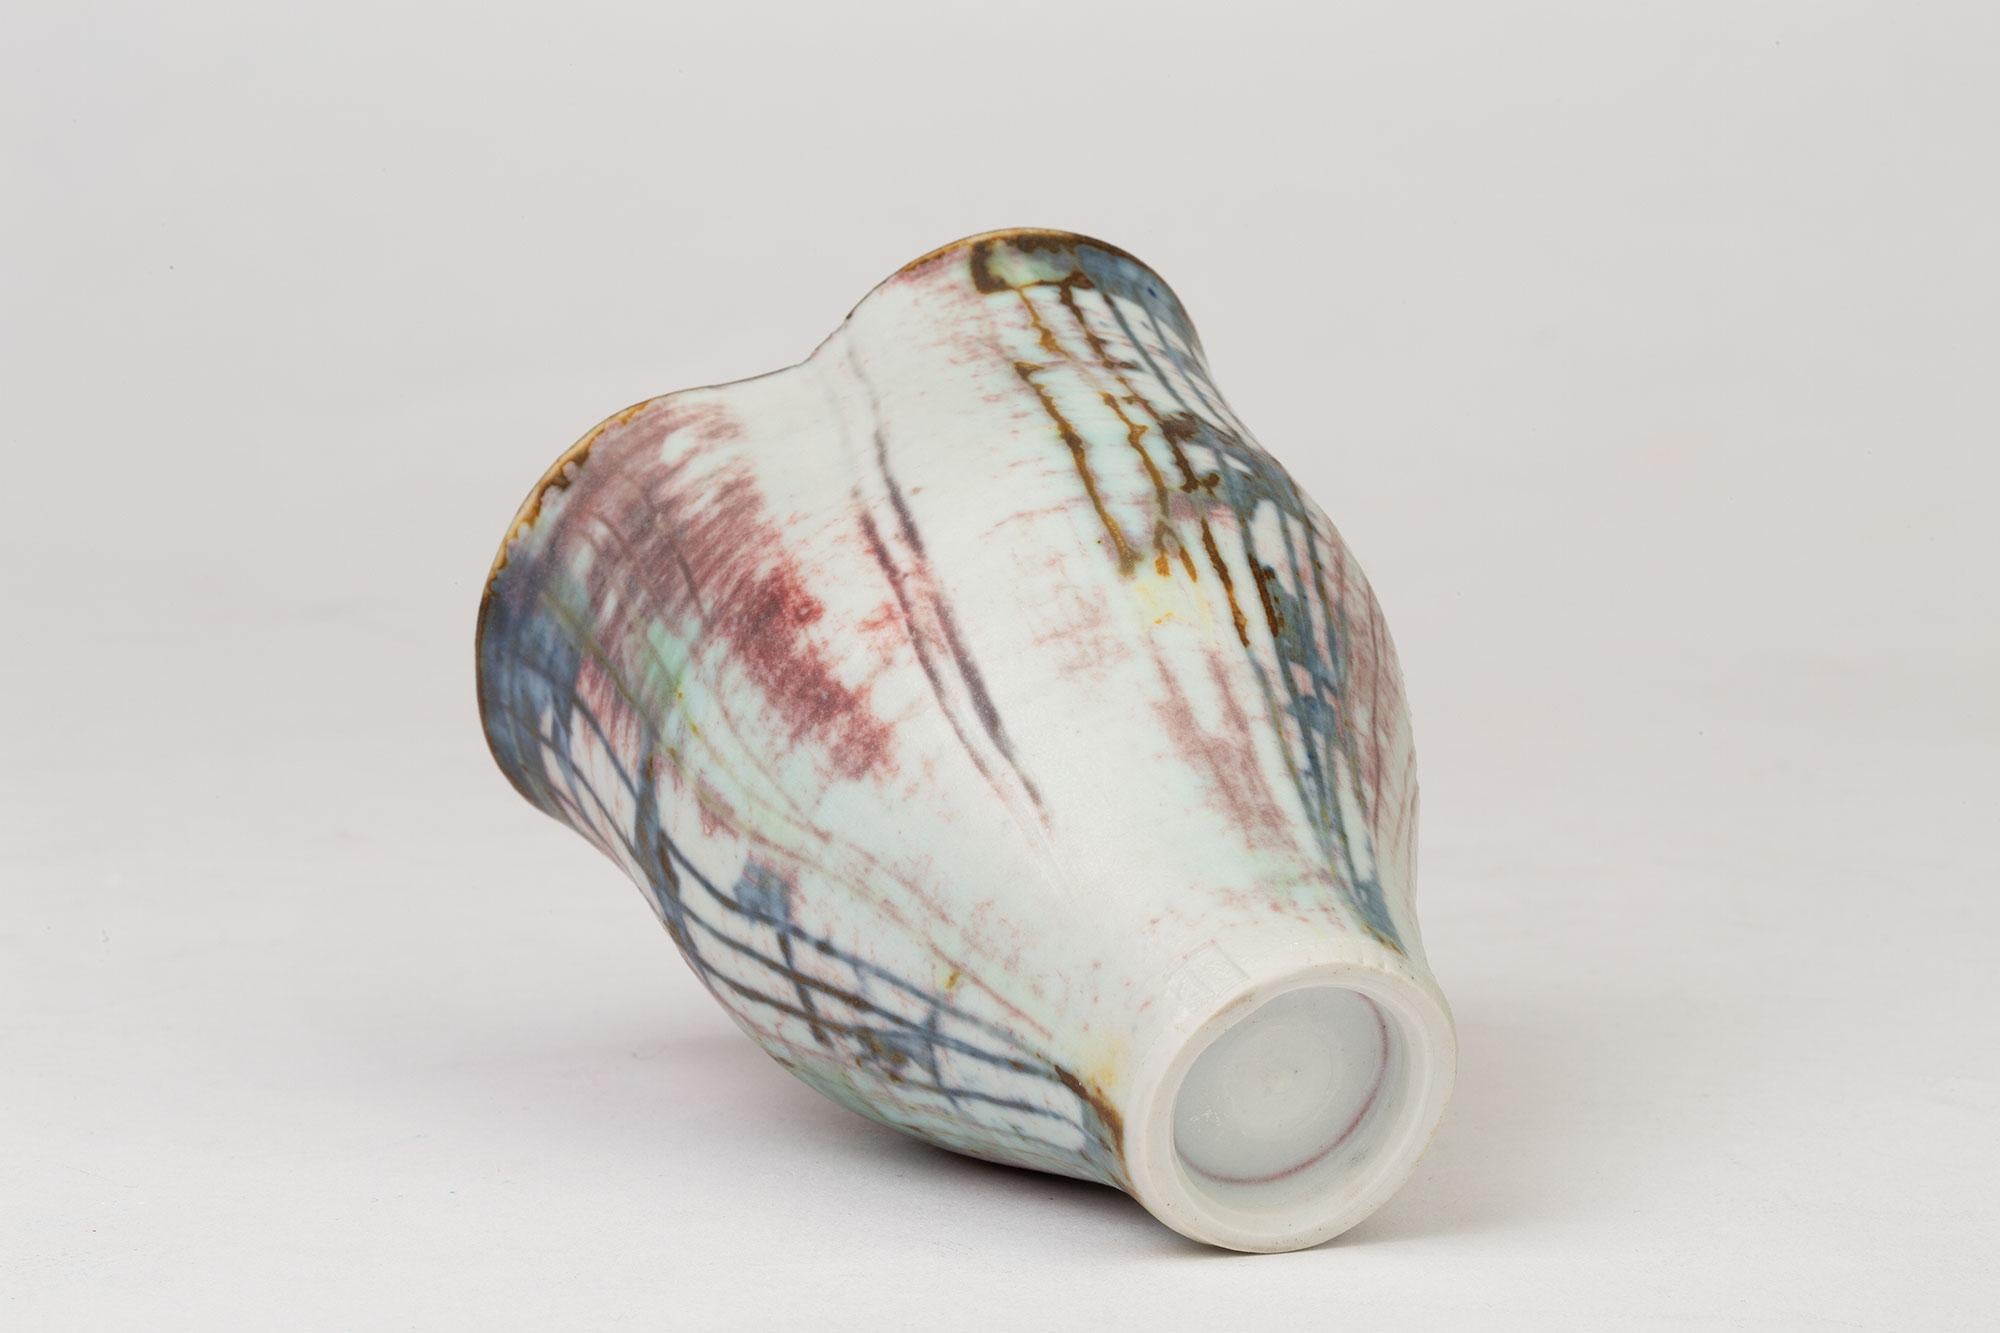 Hand-Crafted Marianne De Trey Studio Porcelain Wax Resist Linear Patterned Vase